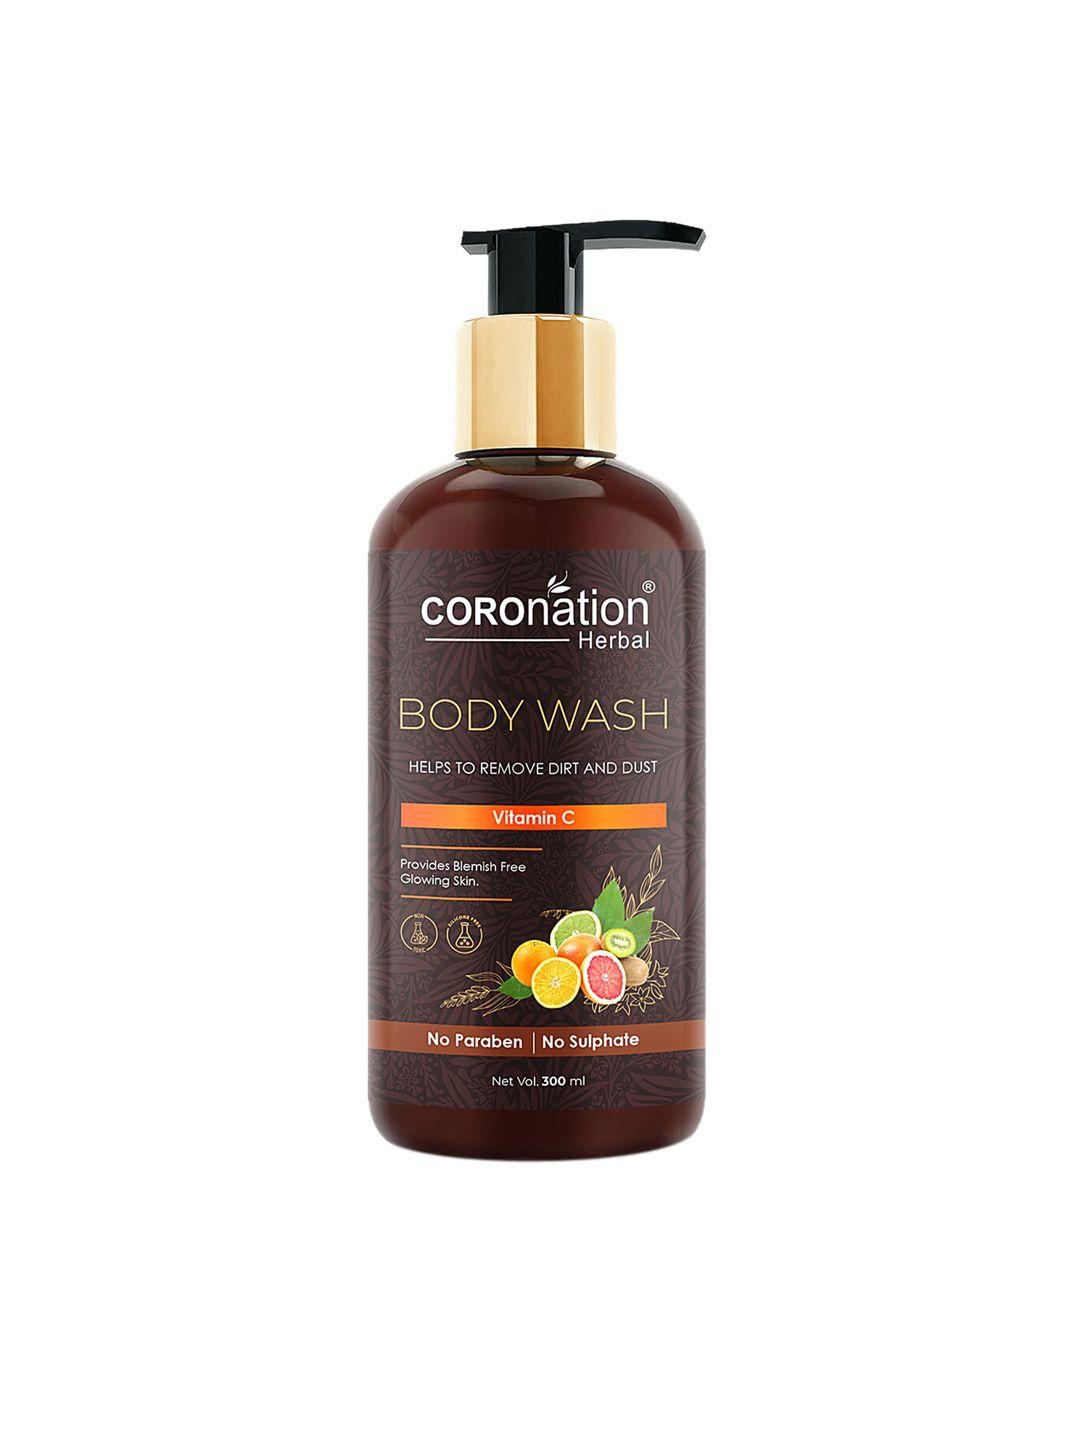 coronation herbal vitamin c body wash for blemish free skin - 300ml